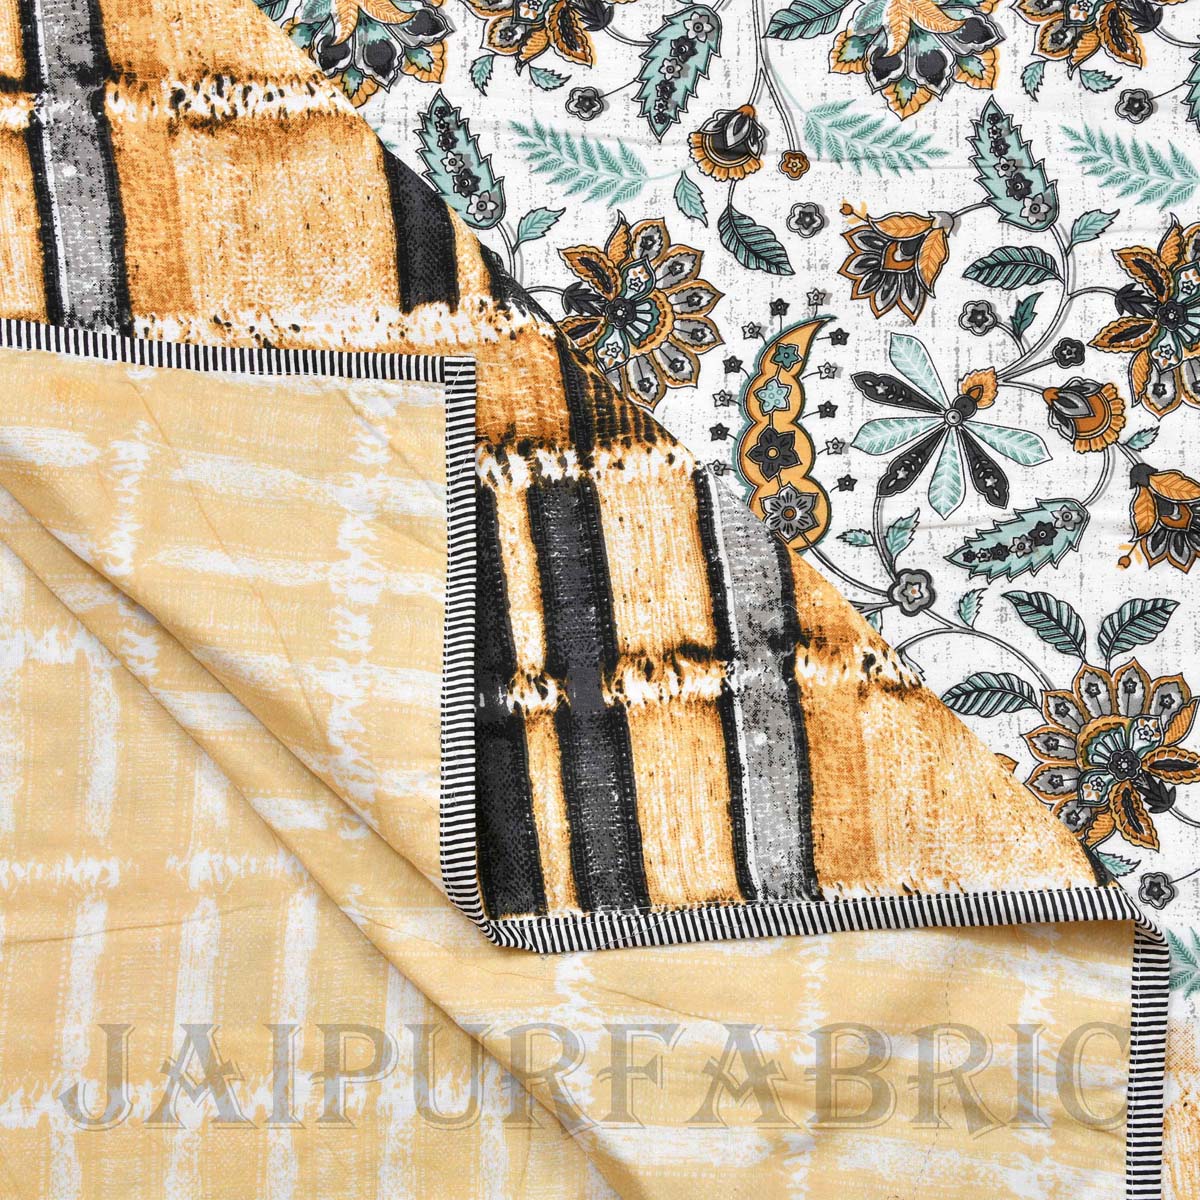 AC Room Dohar Hop Trefoil Yellow Brick Pattern 210 GSM Pure Cotton Summer Blanket